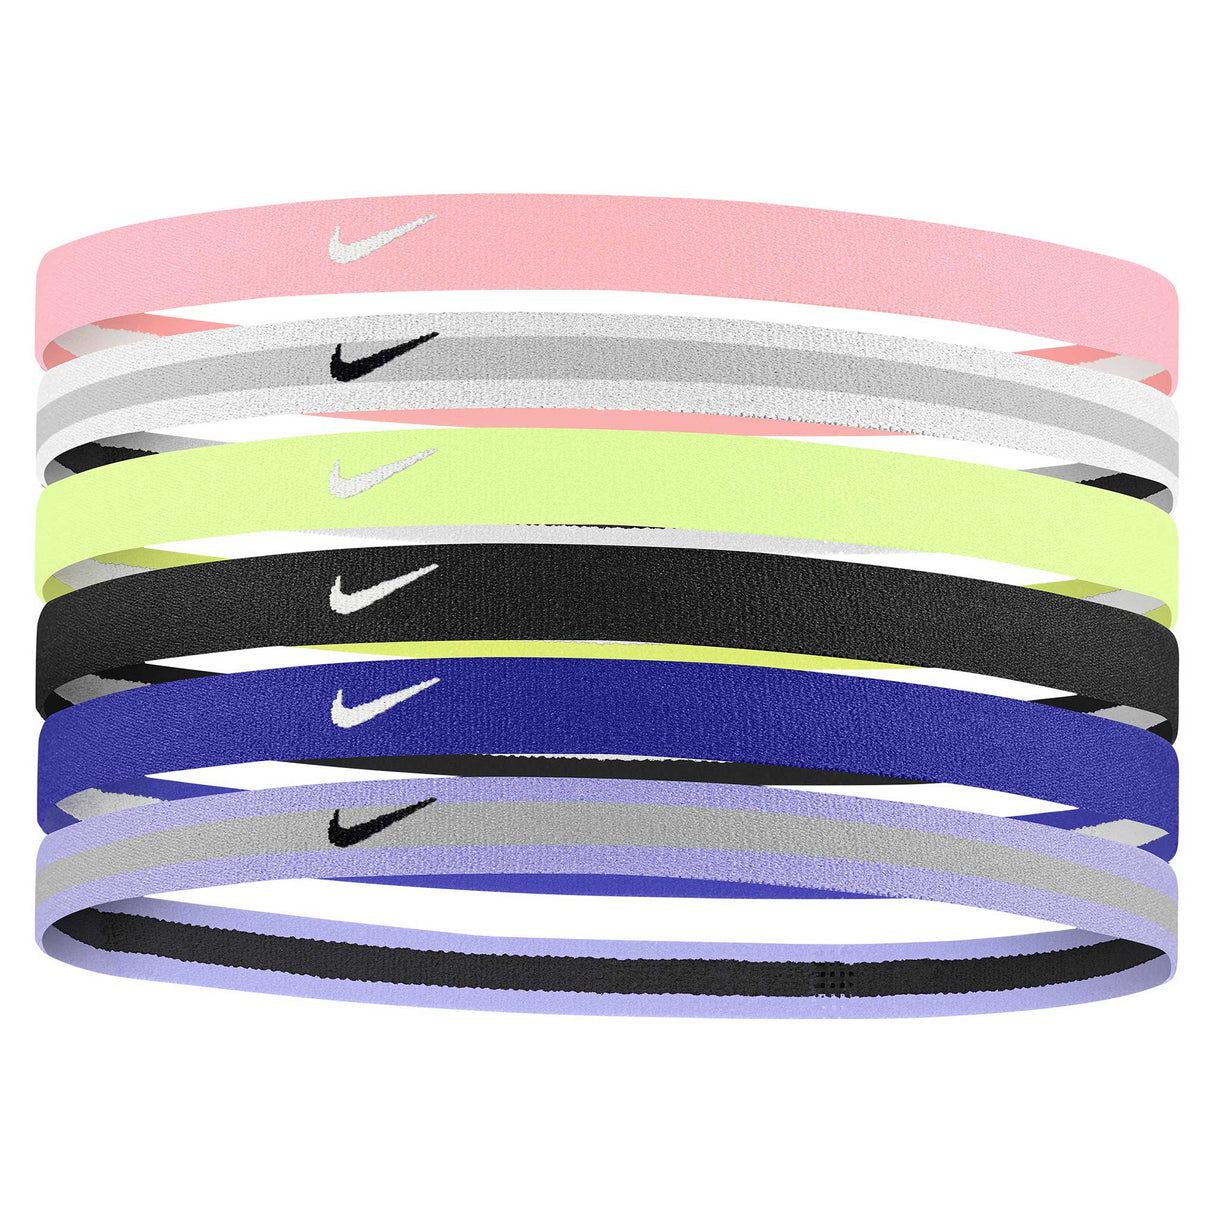 Nike Youth Swoosh Headbands 6pk bandeaux sport pour cheveux pour enfant - Pink Foam/White/Lime Ice